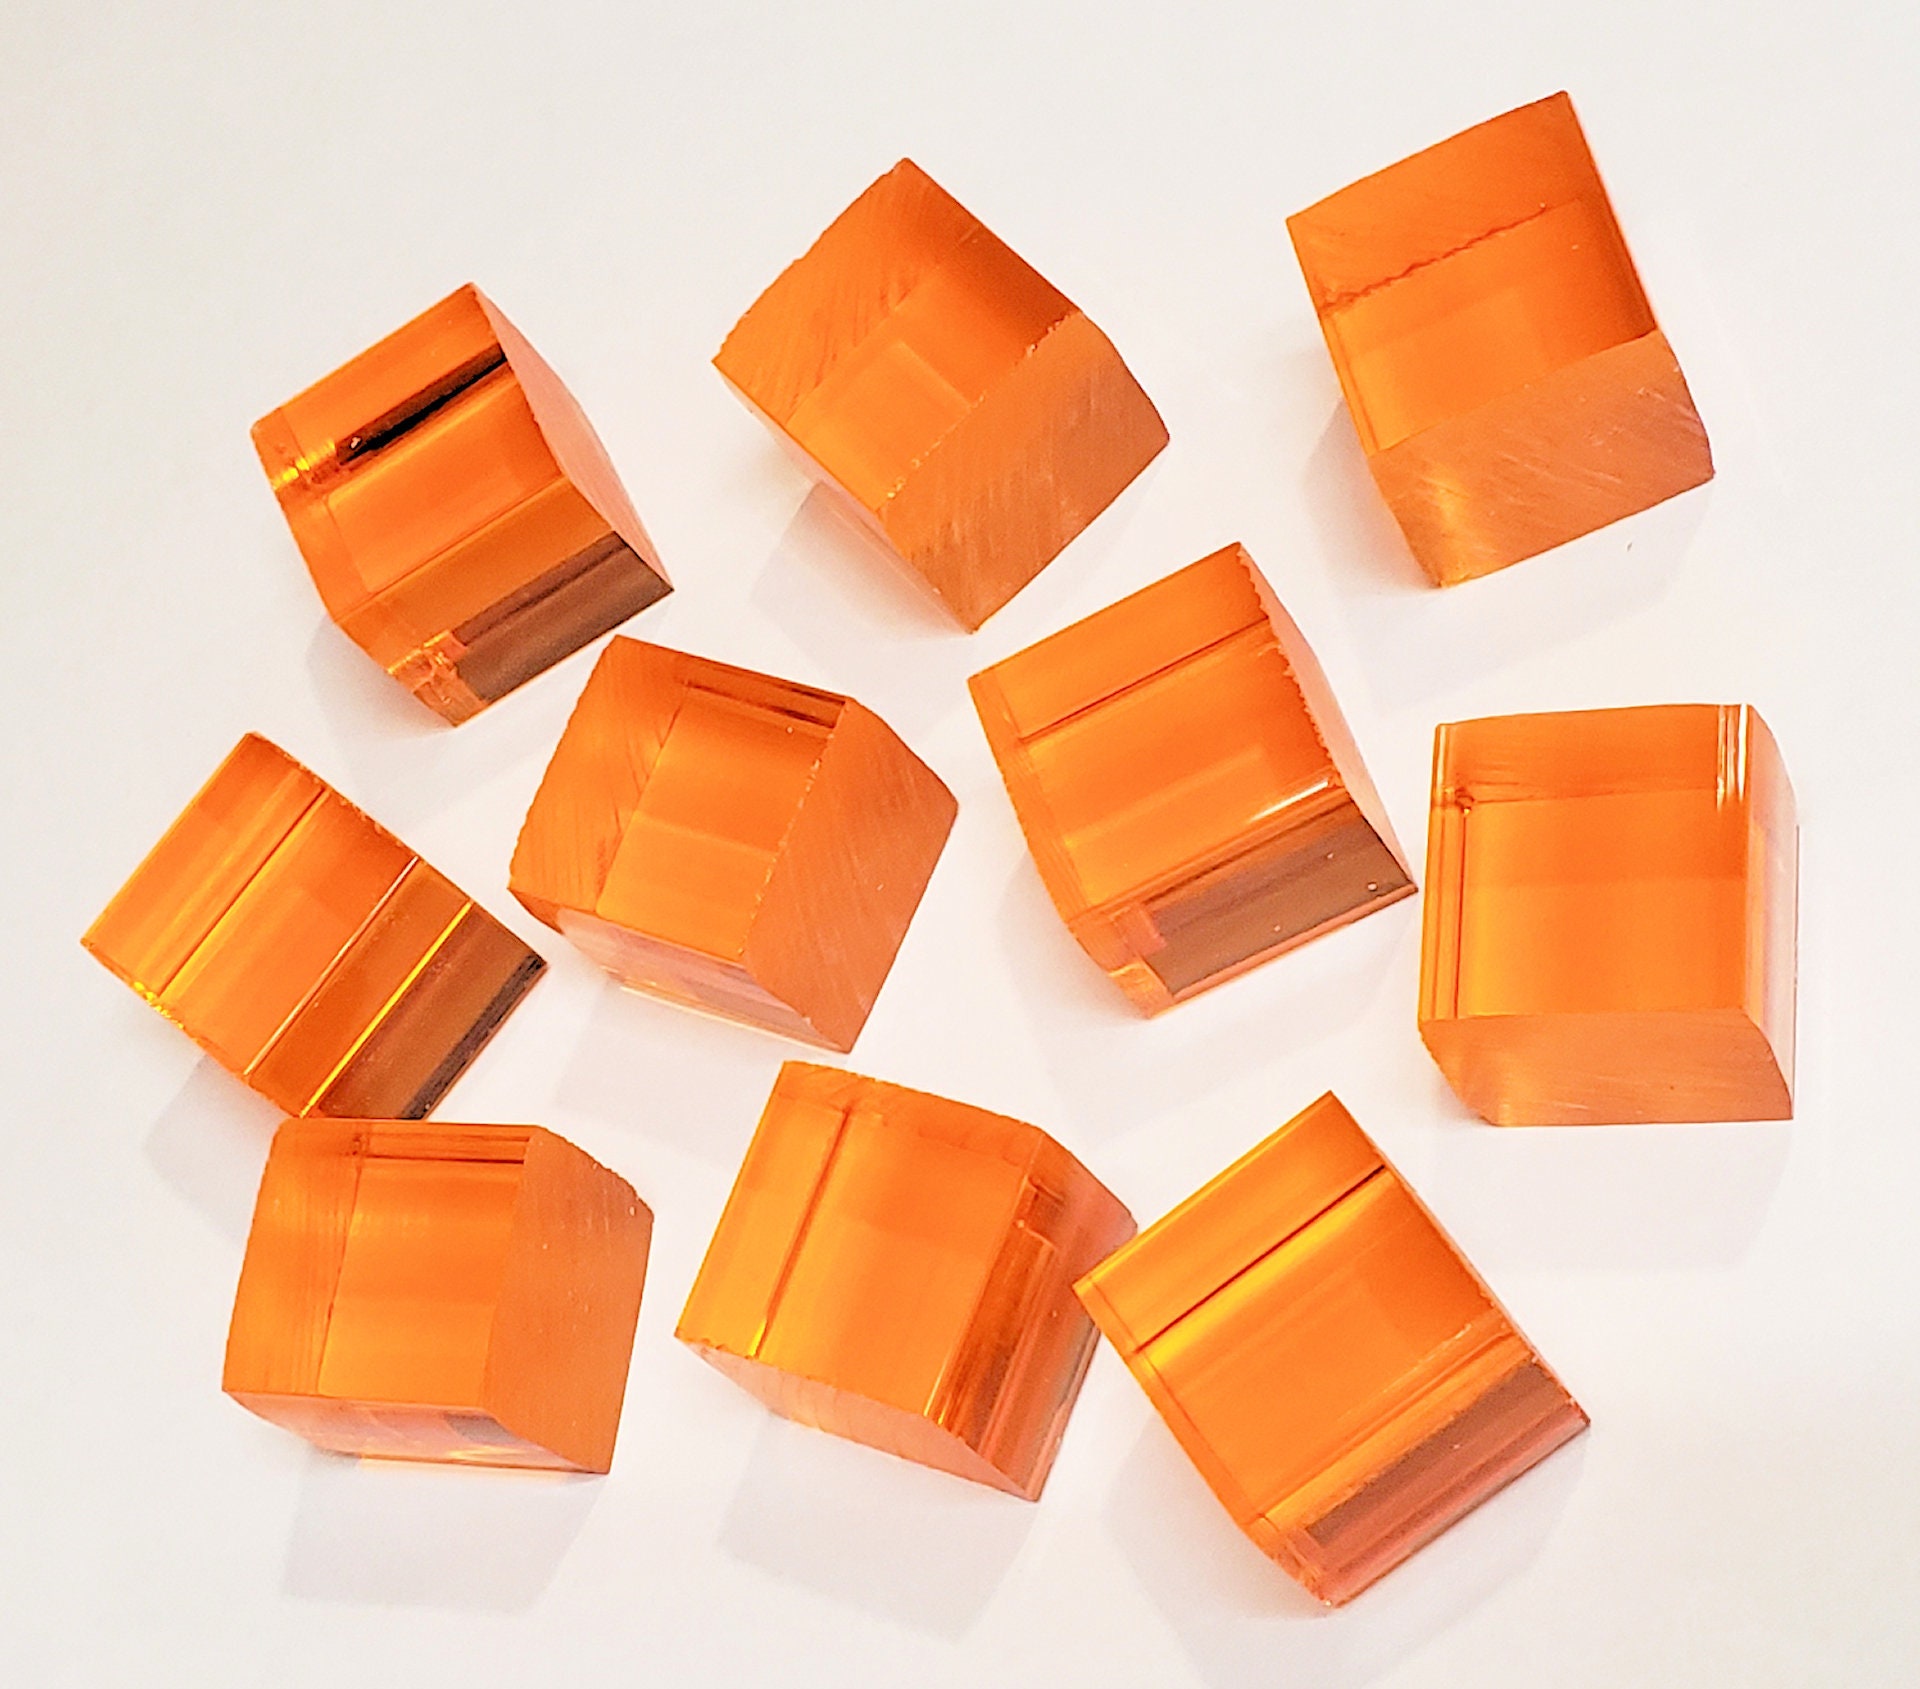 1 x 1 x 1 Unpolished Clear Acrylic Cube